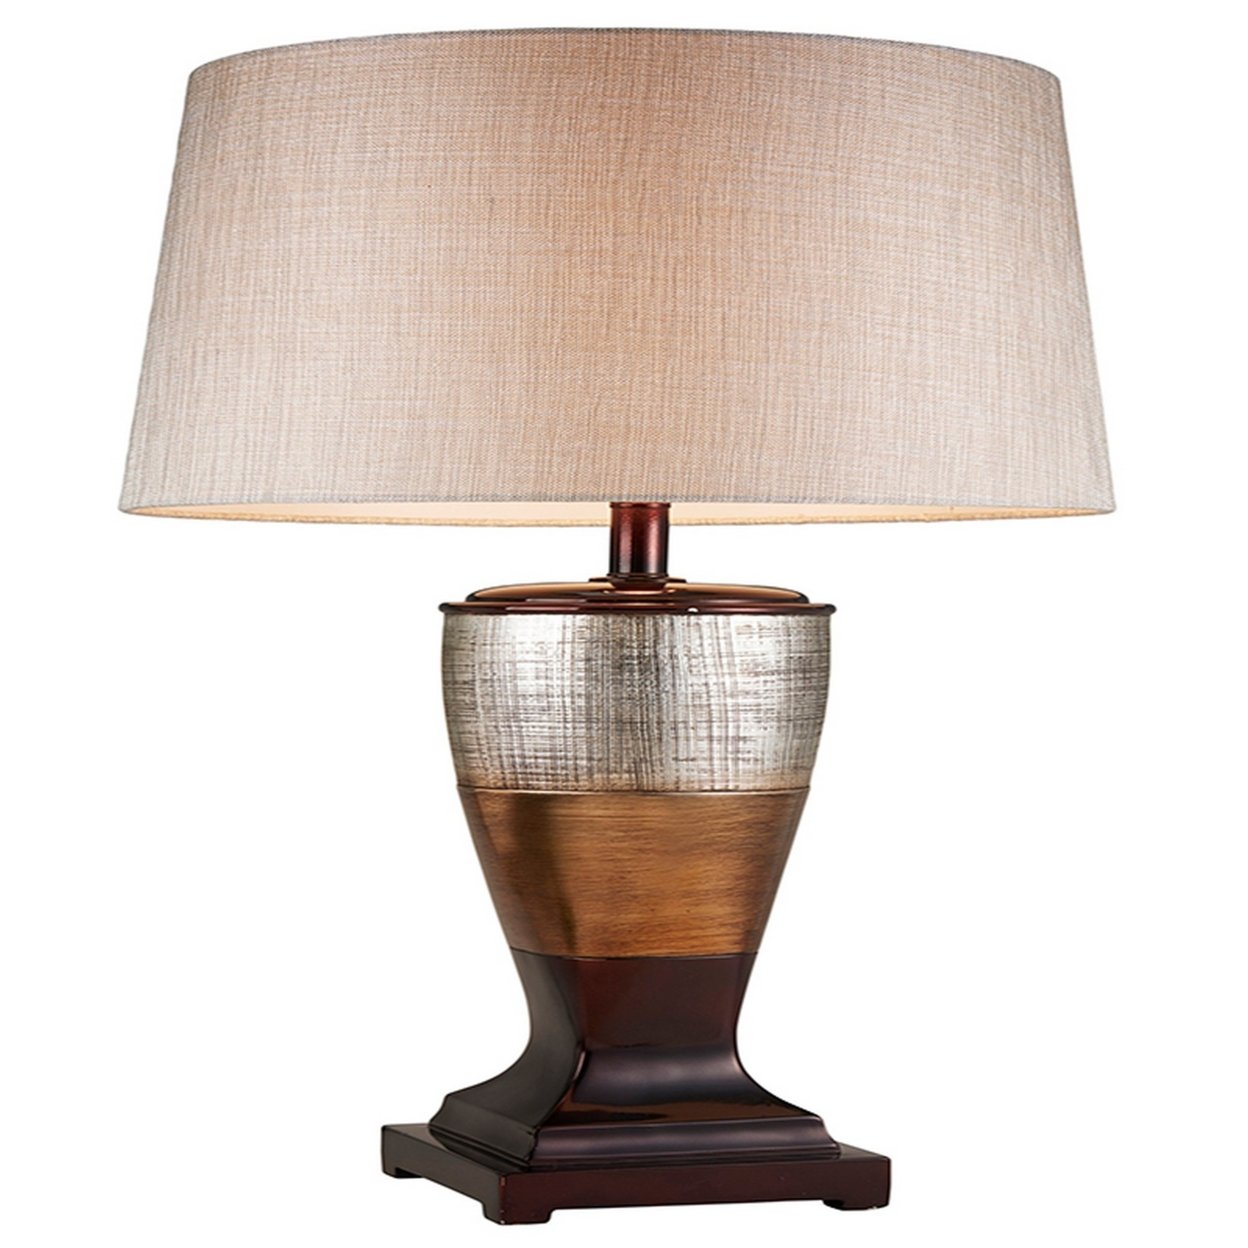 Table Lamp With Colorblock Pedestal Base, Brown- Saltoro Sherpi